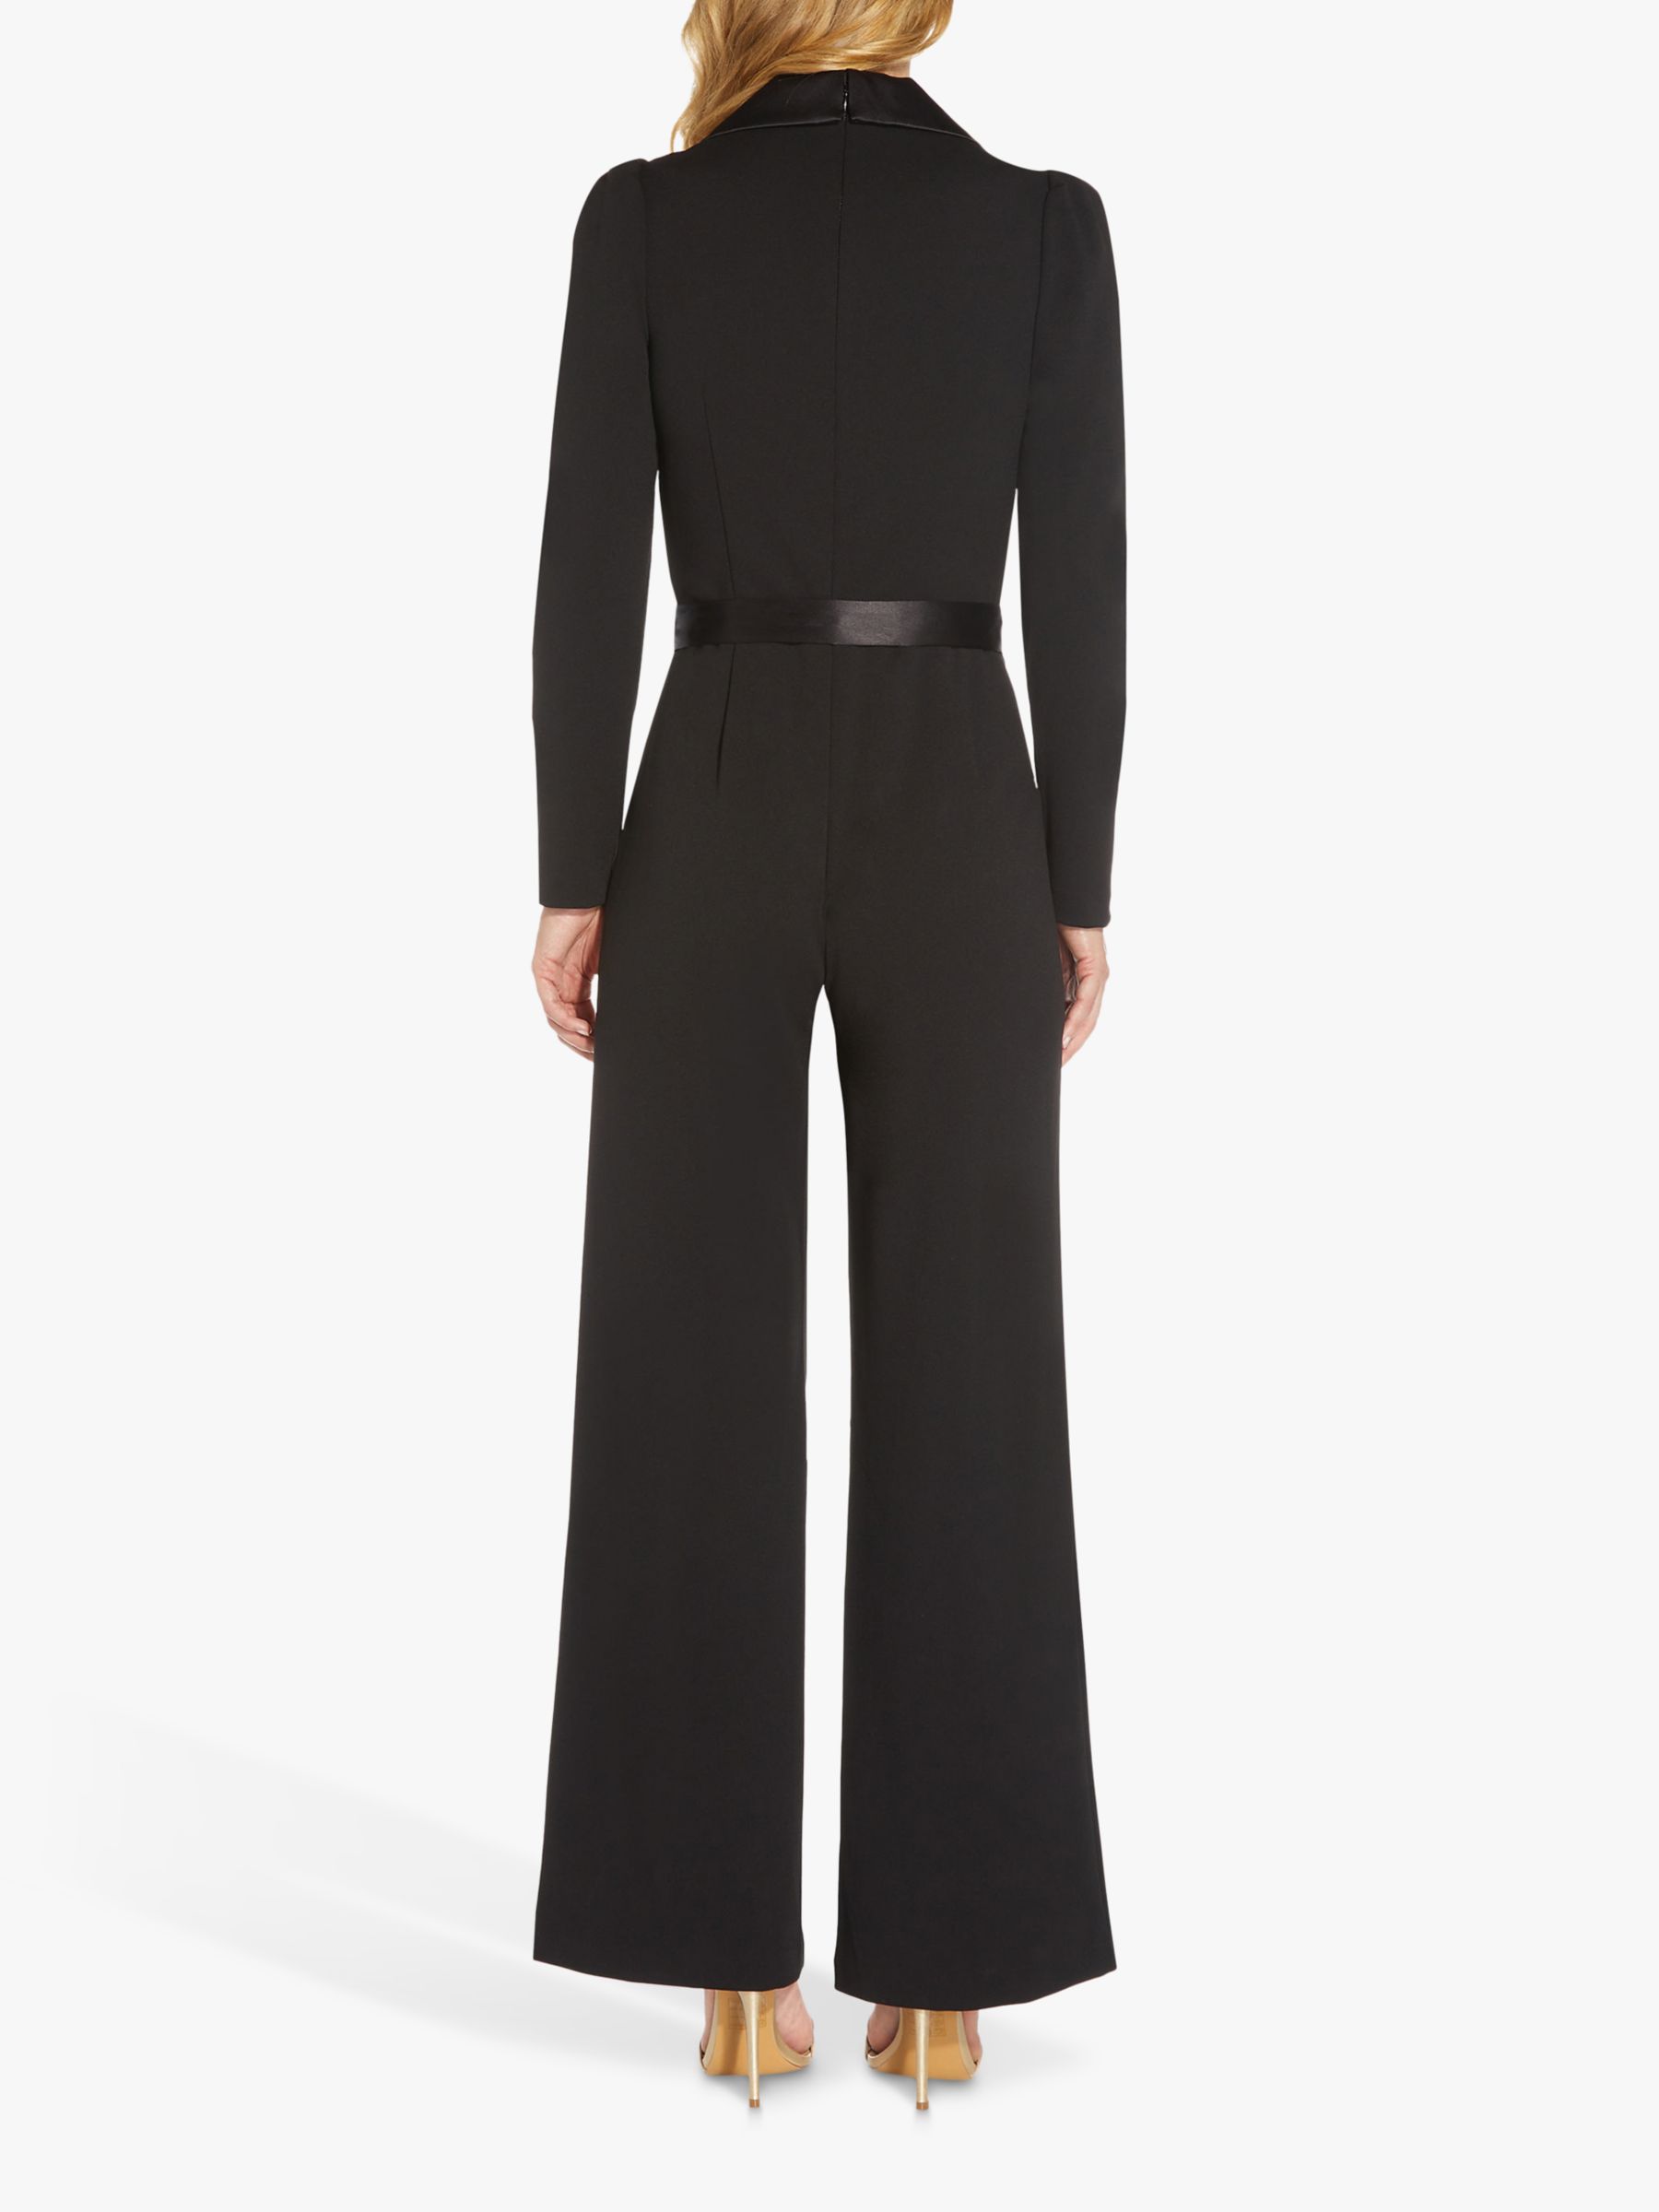 Adrianna Papell Knit Crepe Tuxedo Jumpsuit, Black, 6